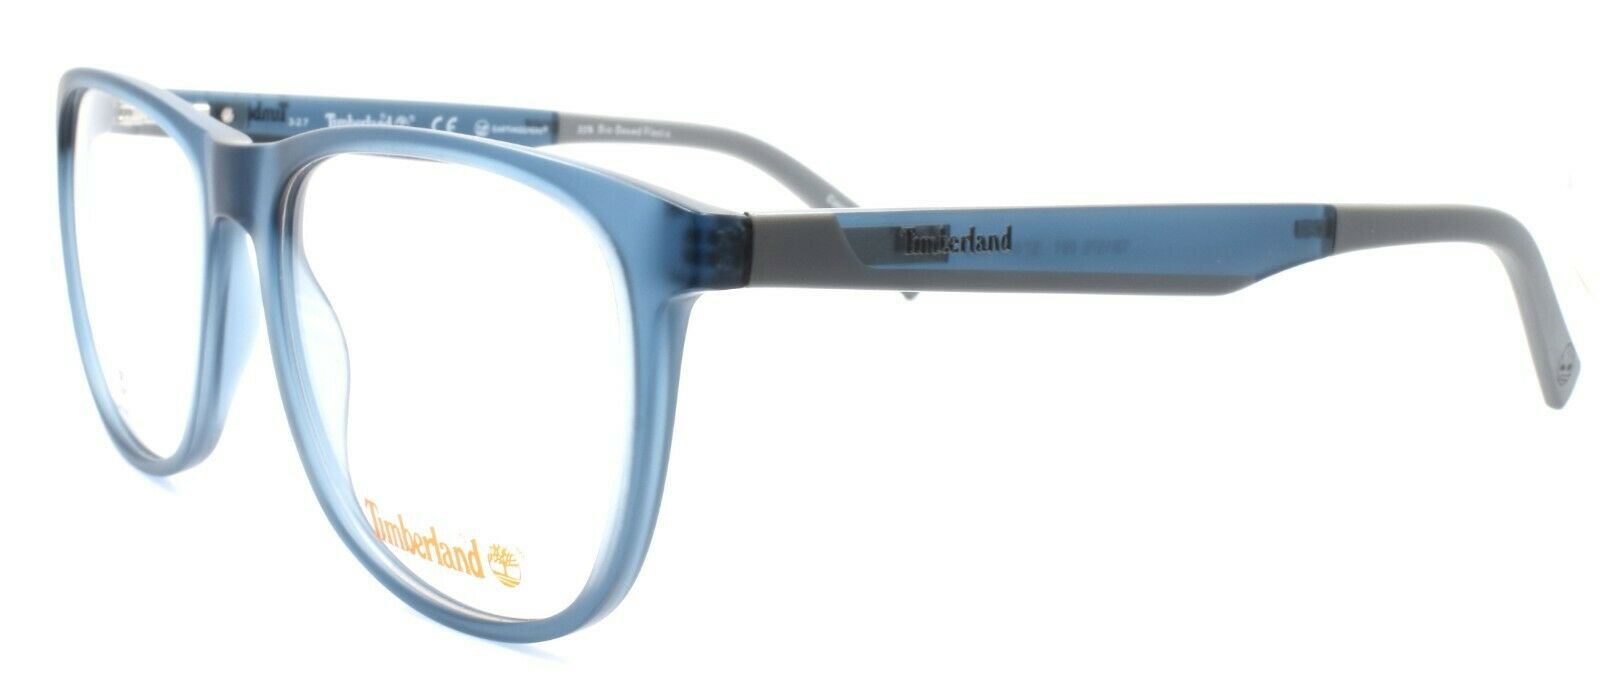 1-TIMBERLAND TB1576 091 Men's Eyeglasses Frames 57-17-145 Matte Blue + CASE-664689913305-IKSpecs